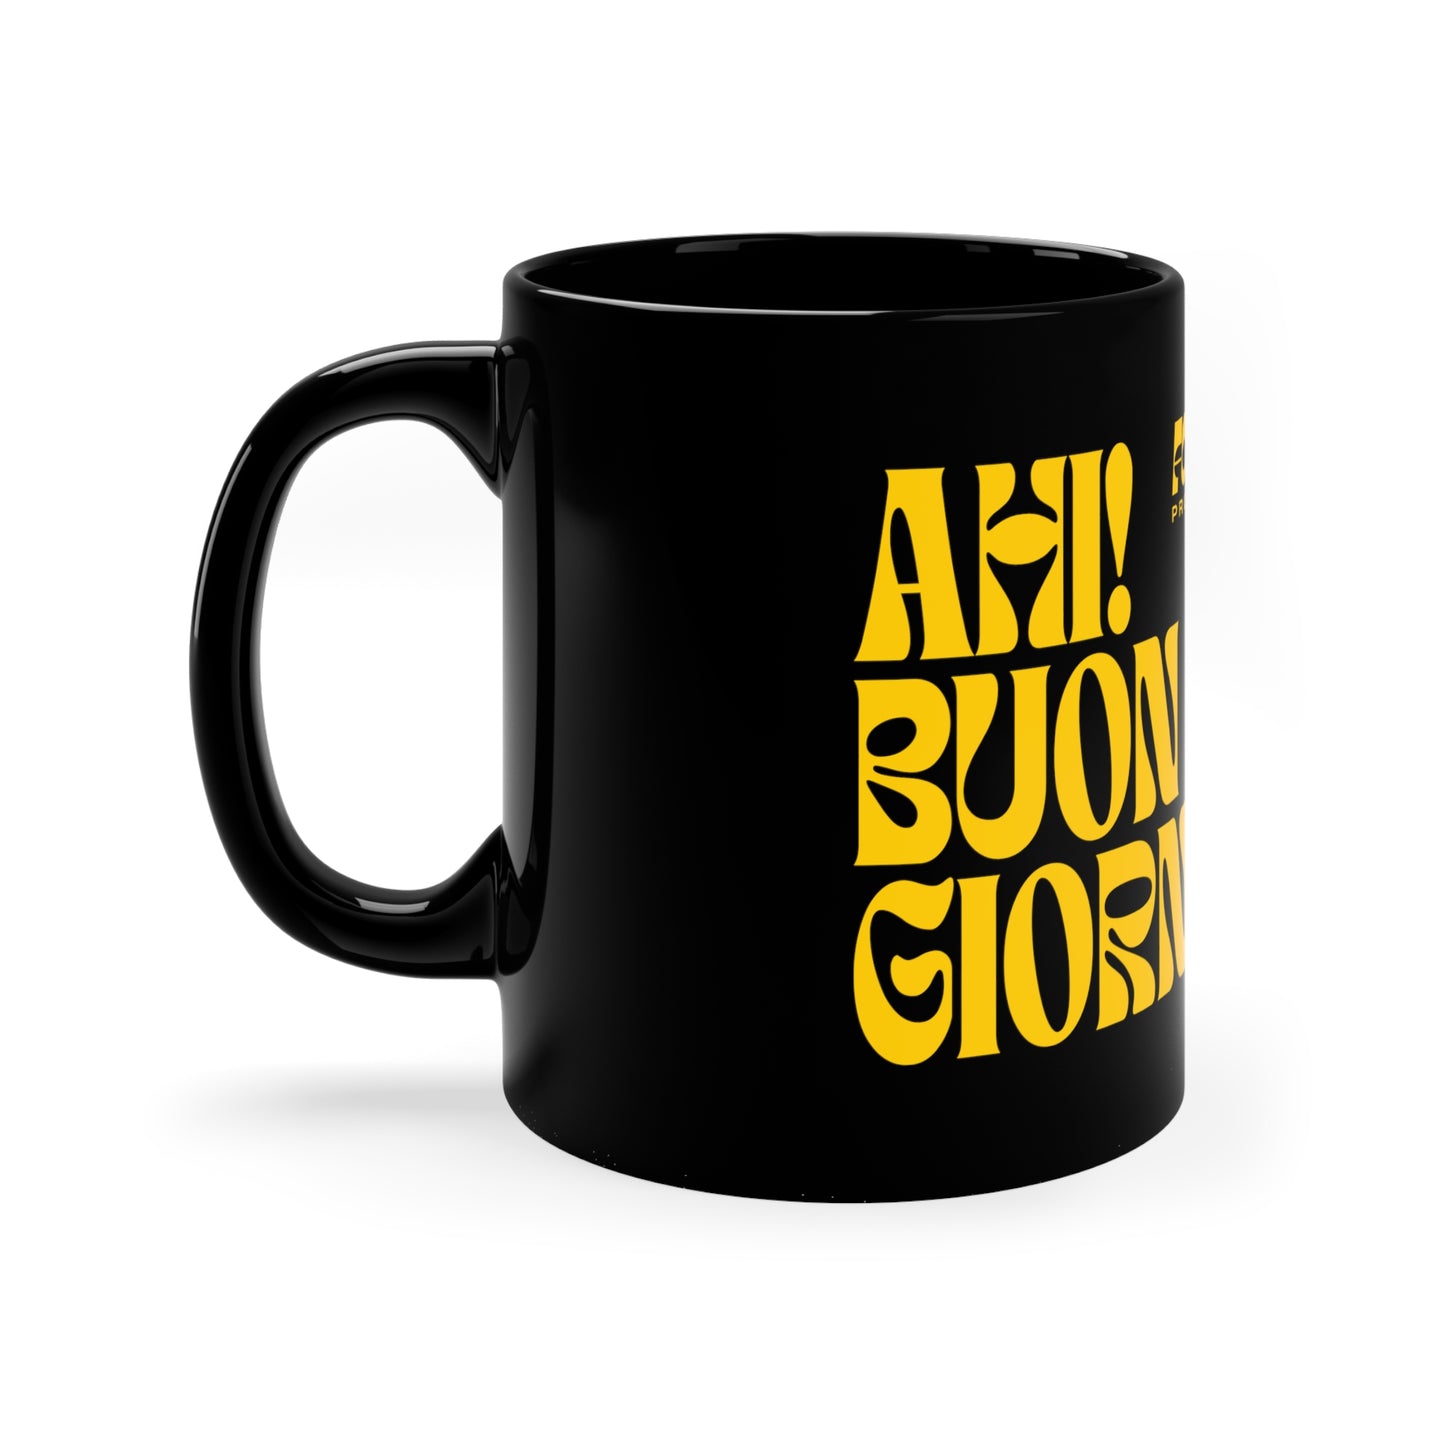 Foggy Project's "Ahi! Buongiorno" Black 11oz Black Mug